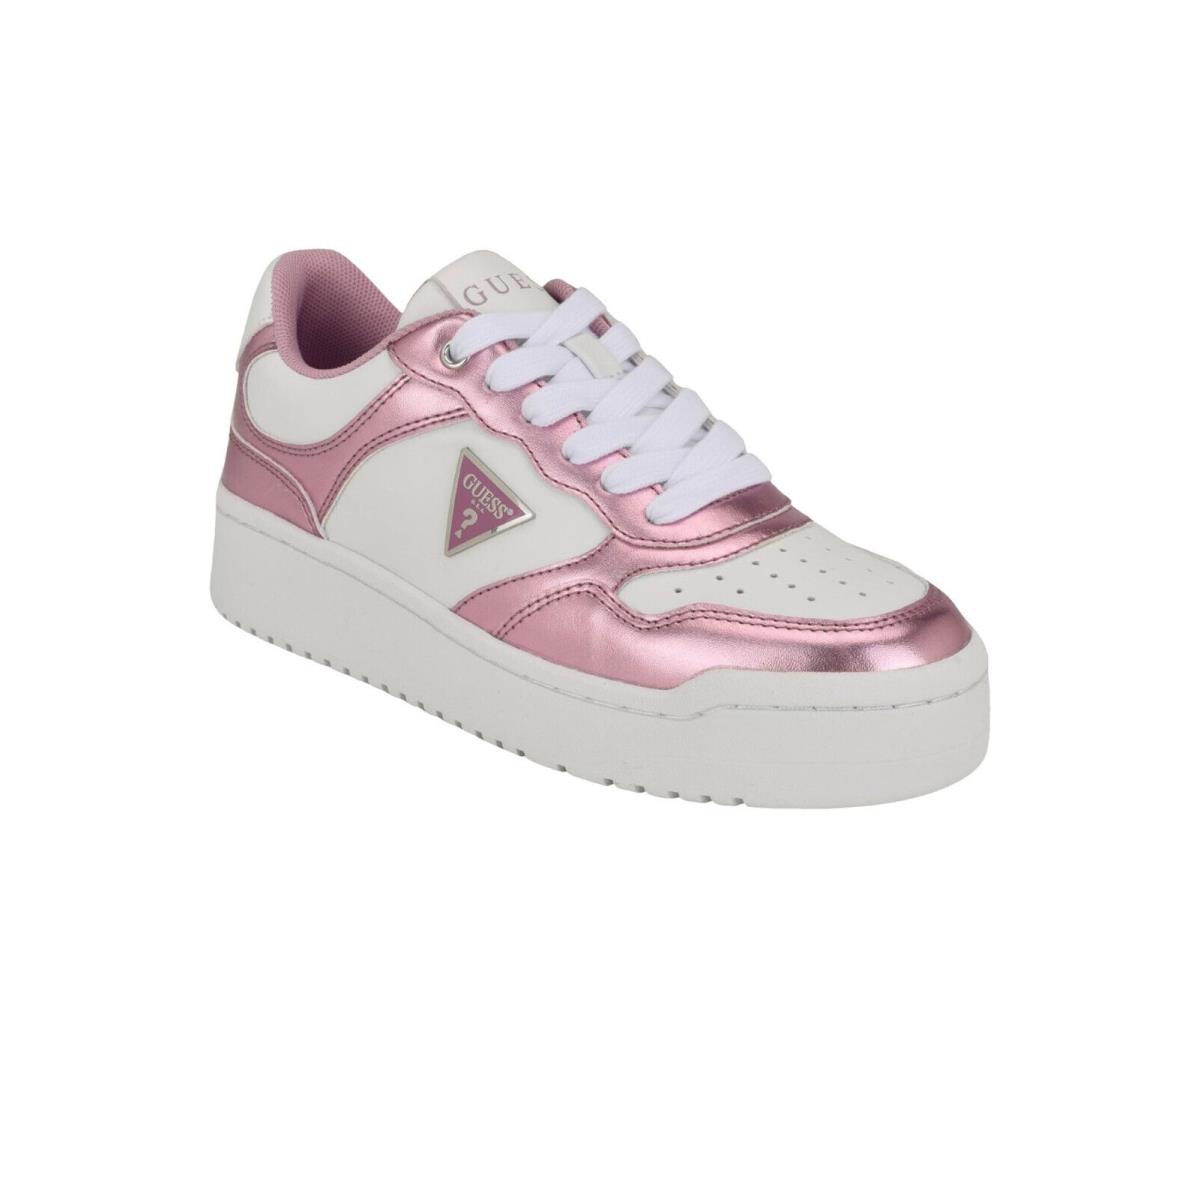 Guess Women White Pink Shoe Miram Gwmiram WHT143